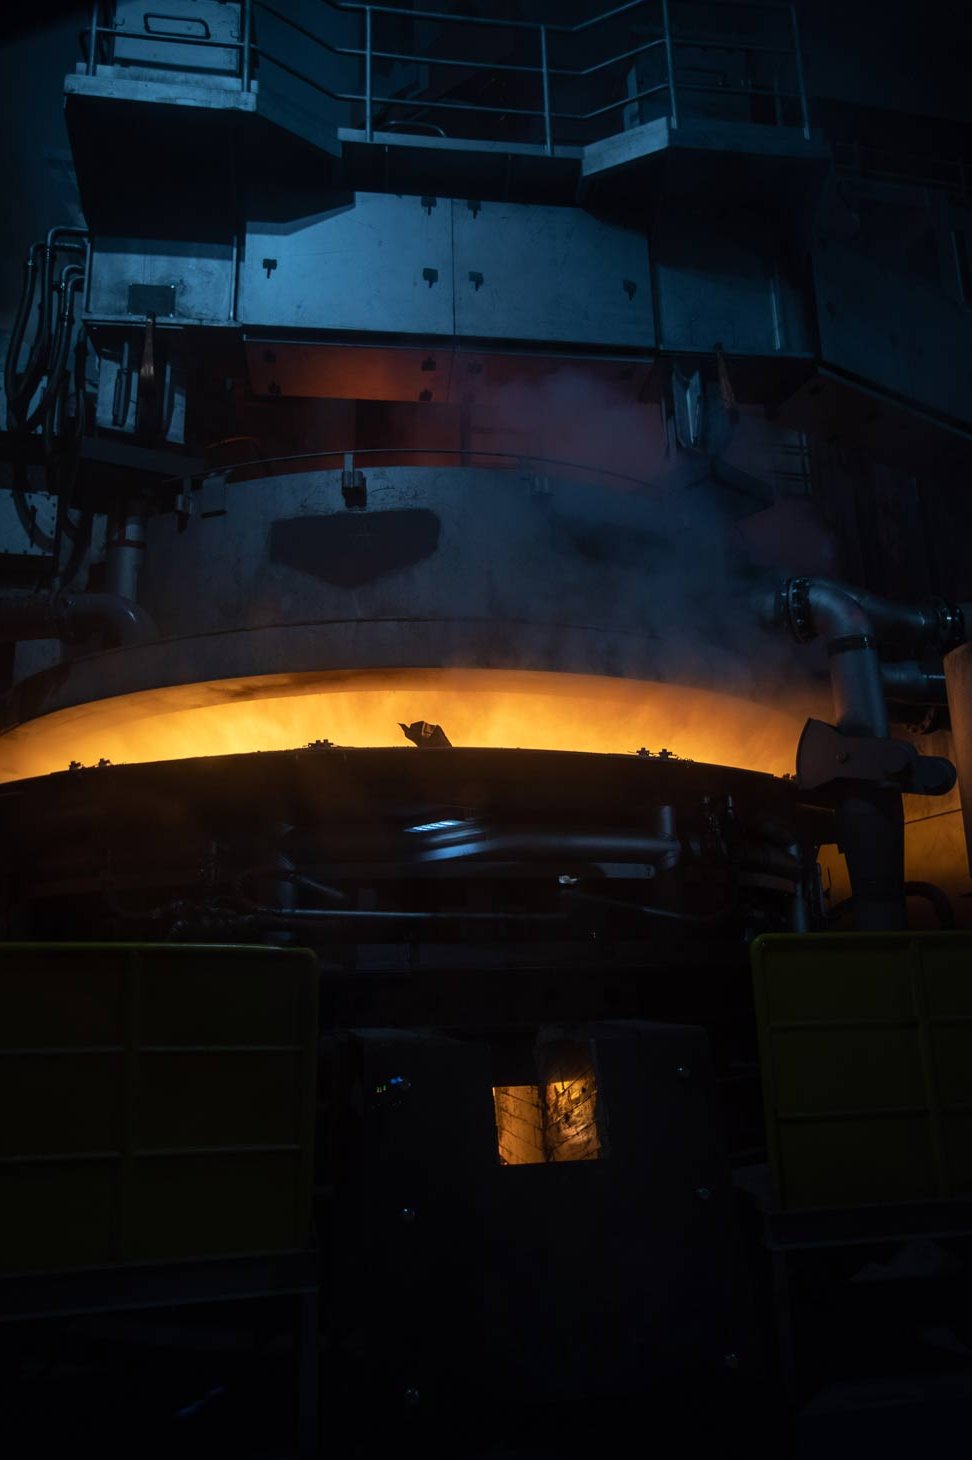 voestalpine blast furnace is illuminated by glowing steel